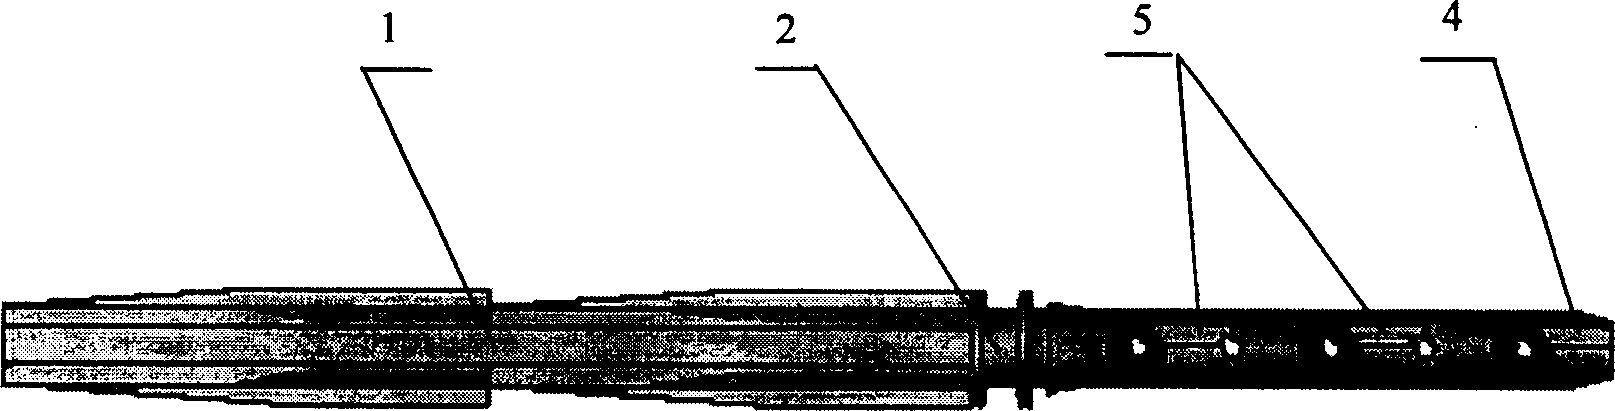 Inserting pole type irrigation device